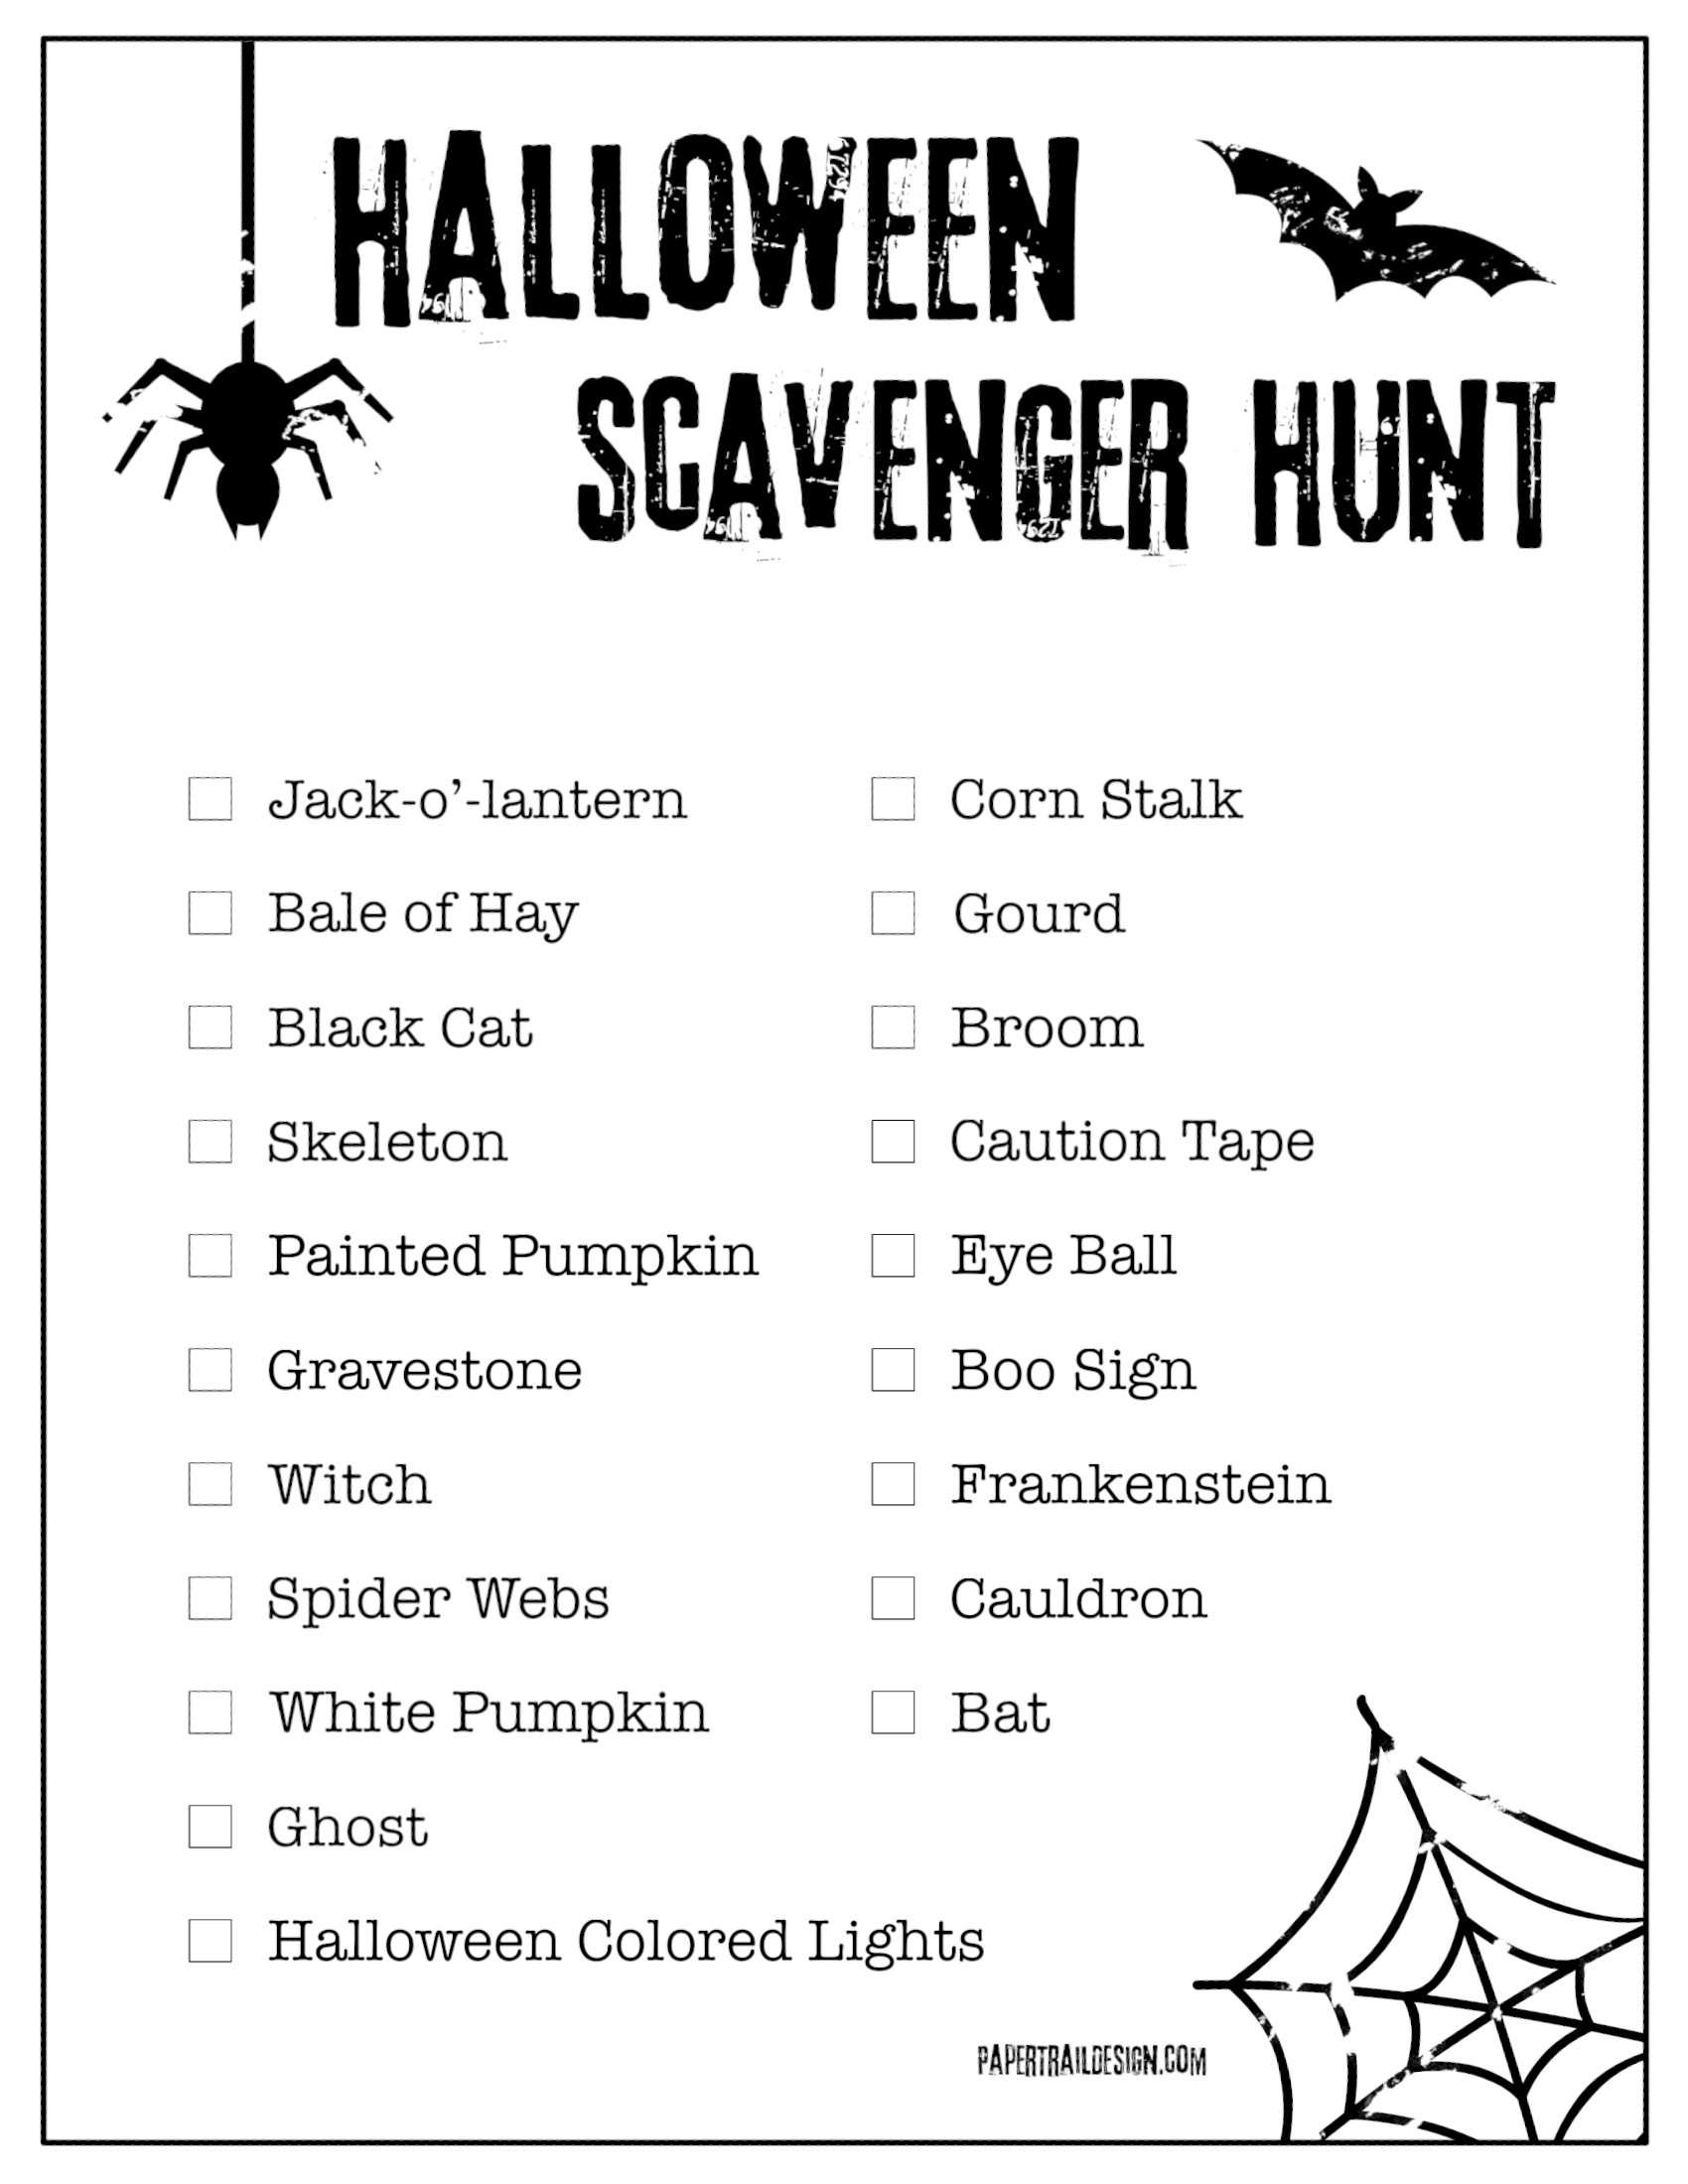 Free Printable Halloween Scavenger Hunt List | Paper Trail Design